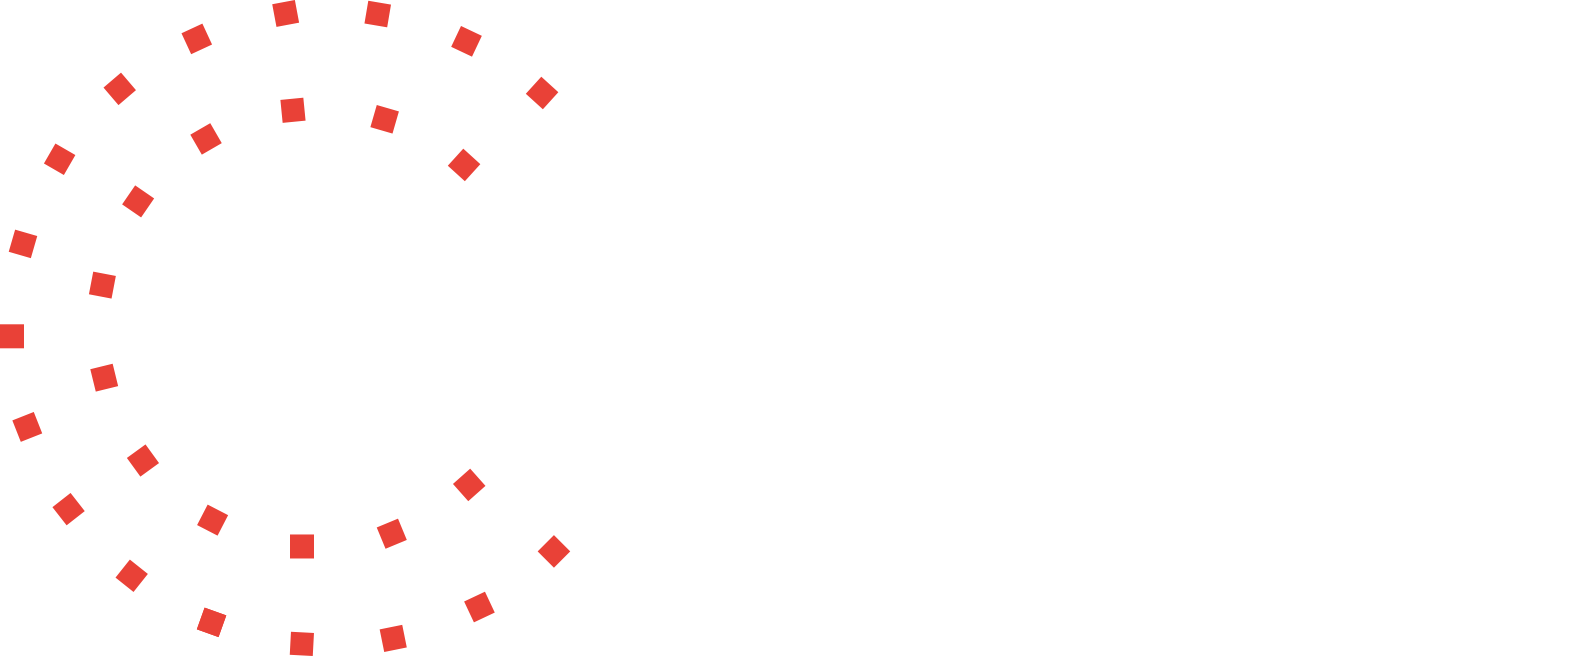 ChildTtust Foundation Logo